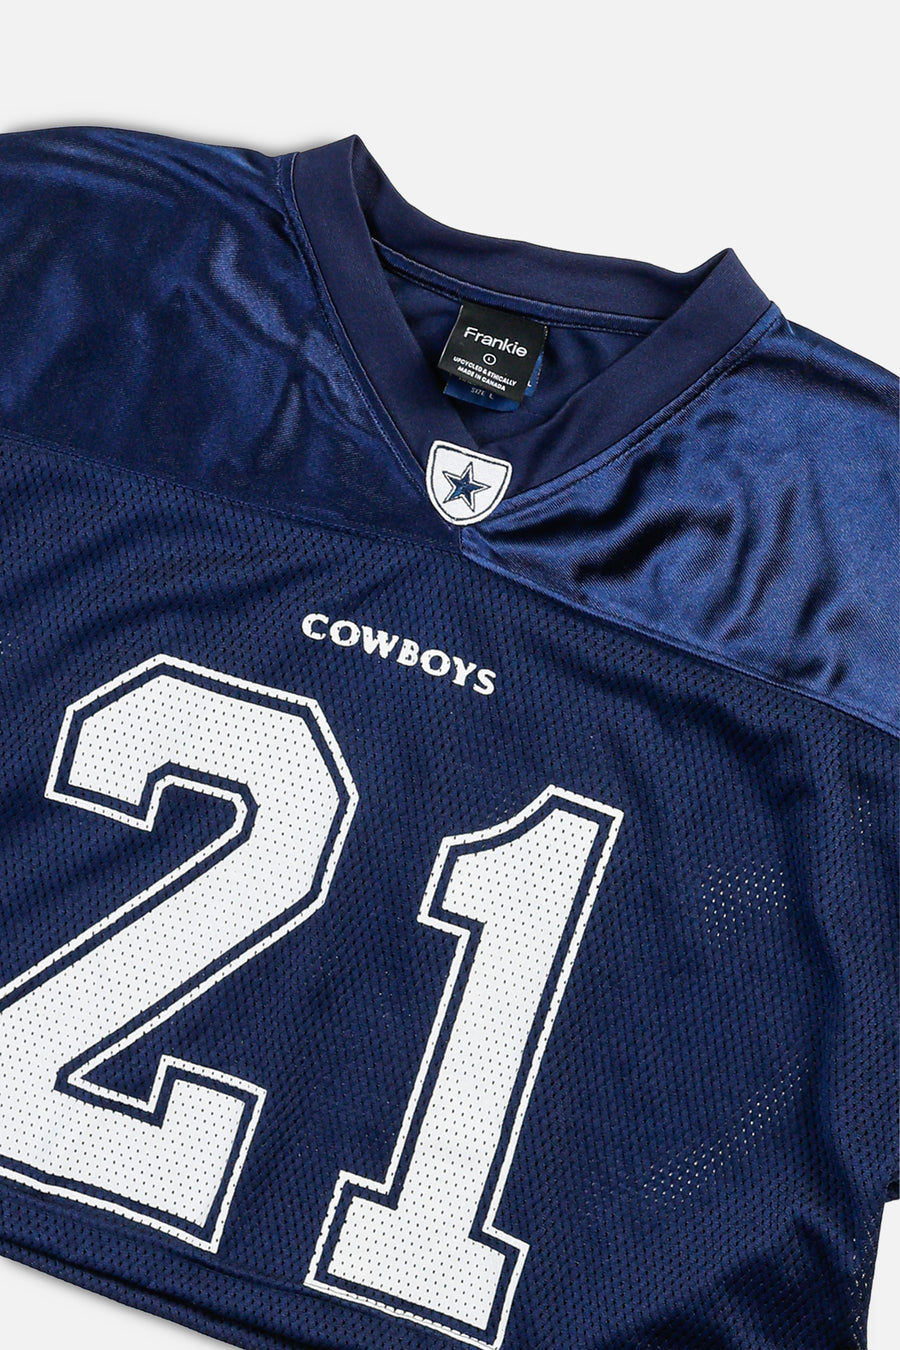 Rework Crop Dallas Cowboys NFL Jersey - L